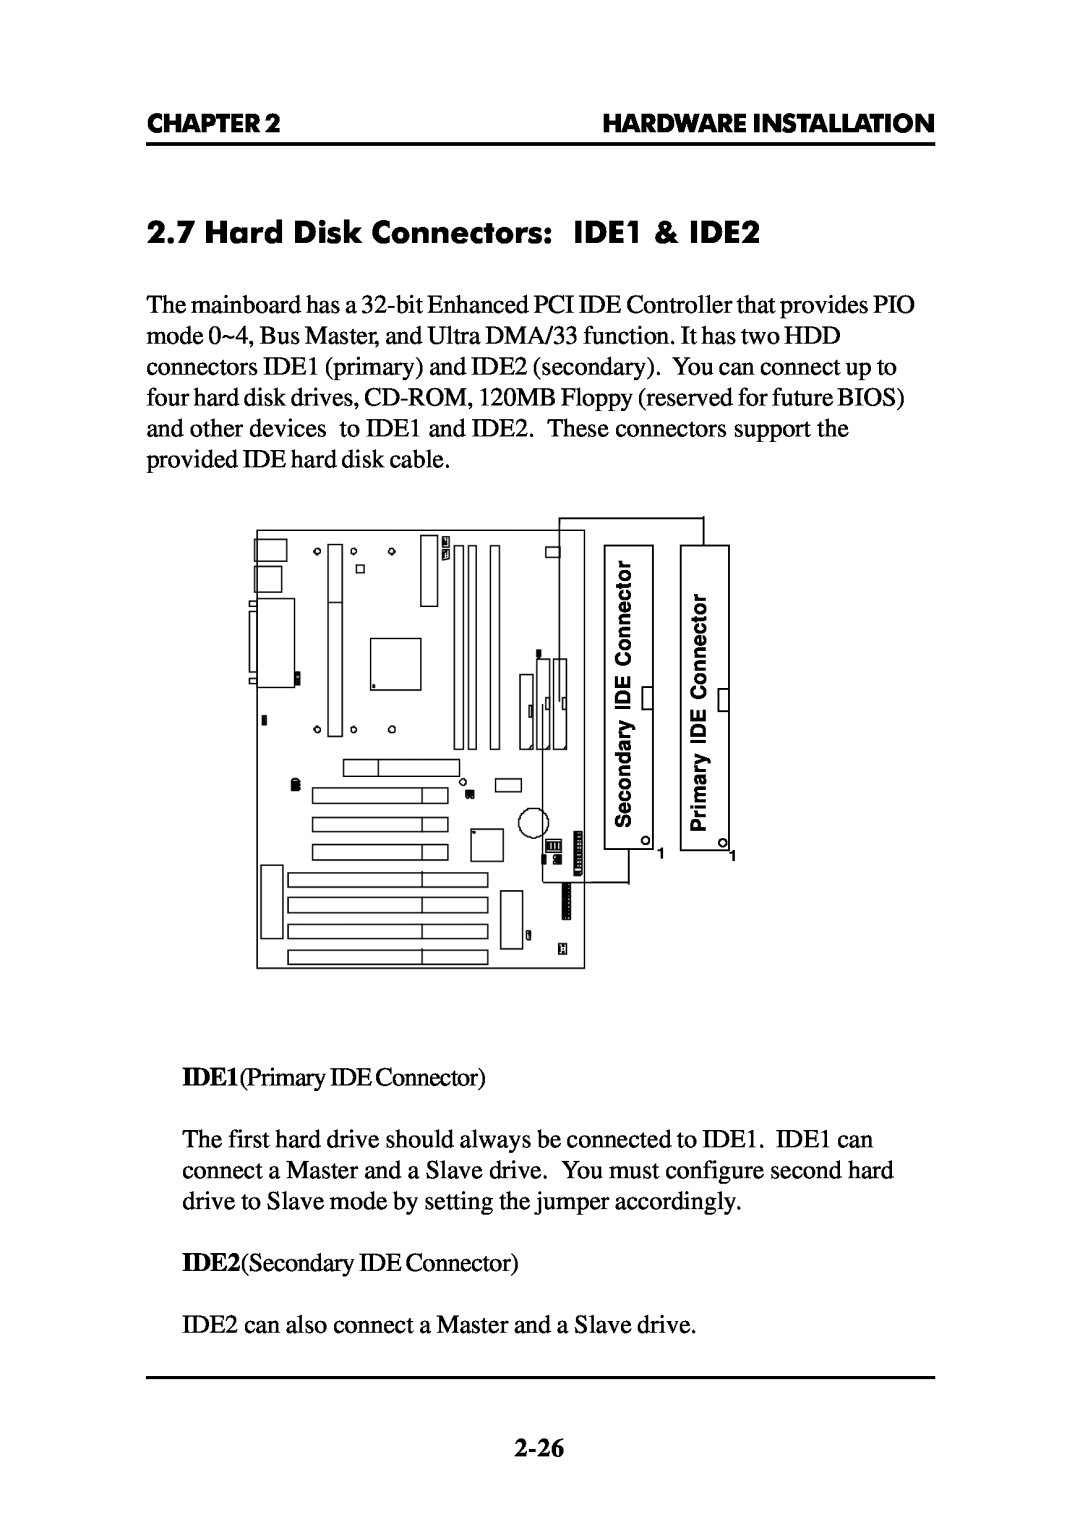 Intel MS-6112 manual Hard Disk Connectors IDE1 & IDE2 